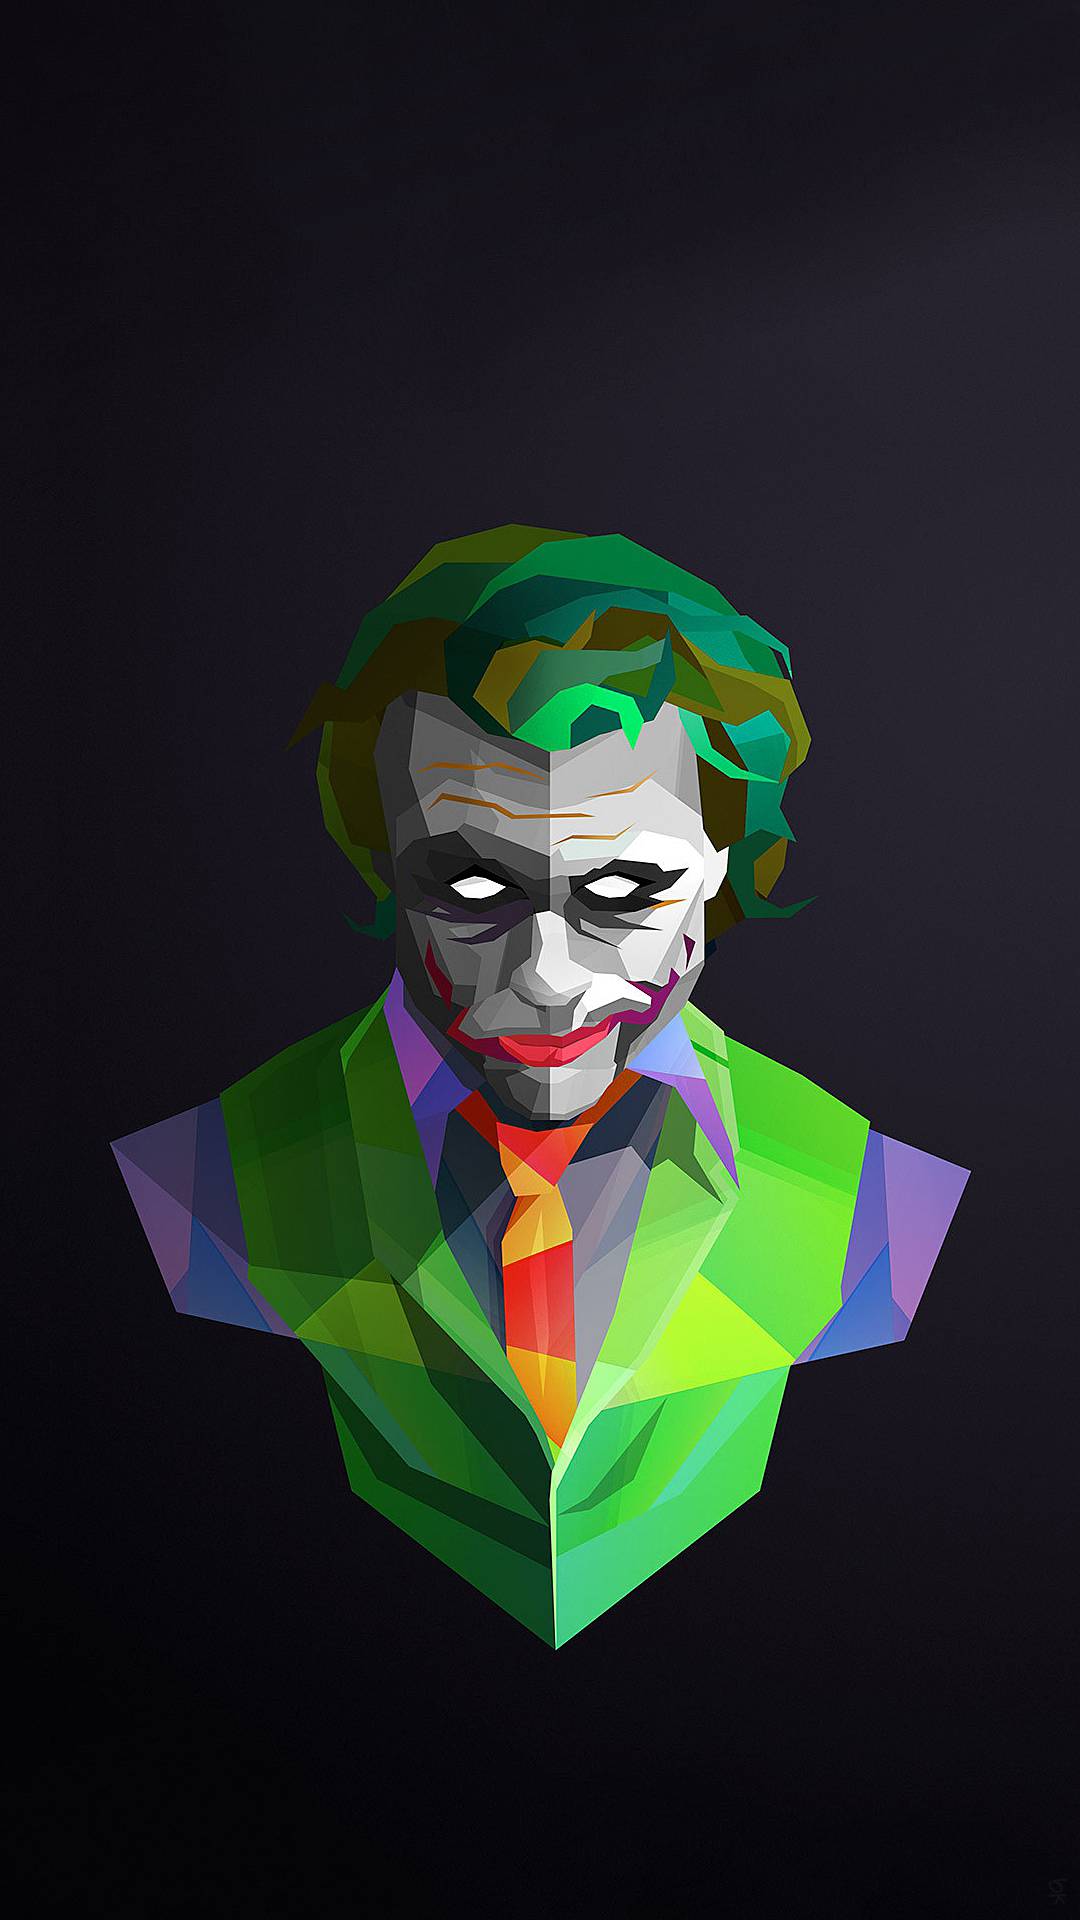 wallpaper masculino,joker,supervillain,art,fictional character,illustration